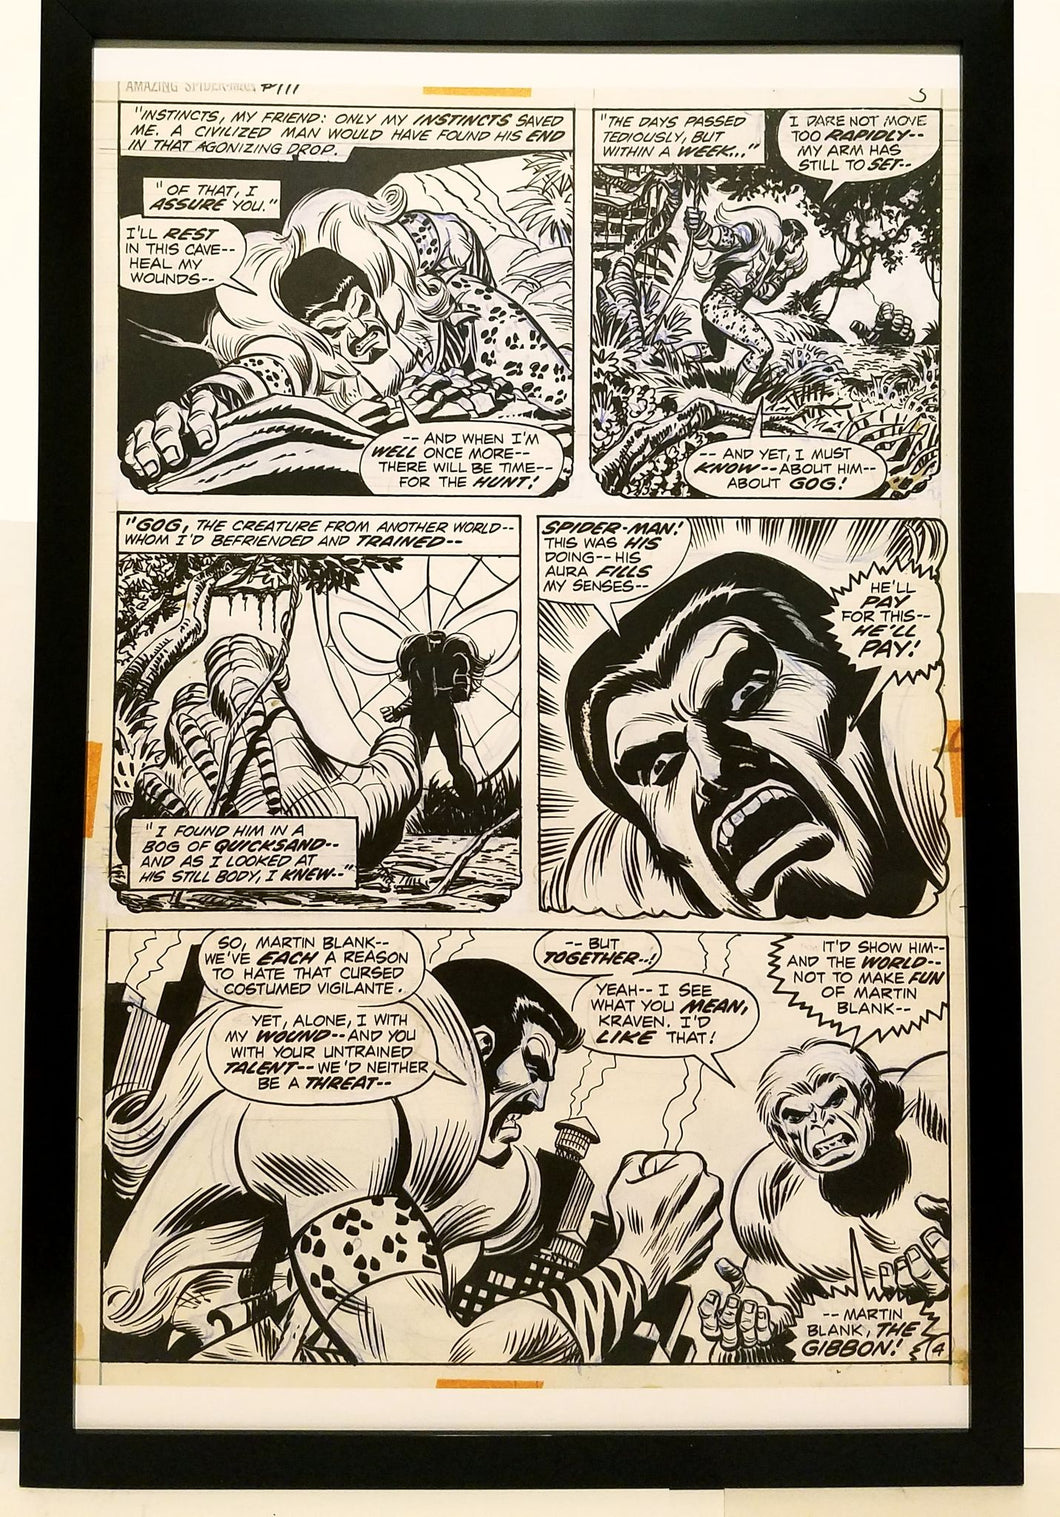 Amazing Spider-Man #111 pg. 4 John Romita 11x17 FRAMED Original Art Poster Marvel Comics